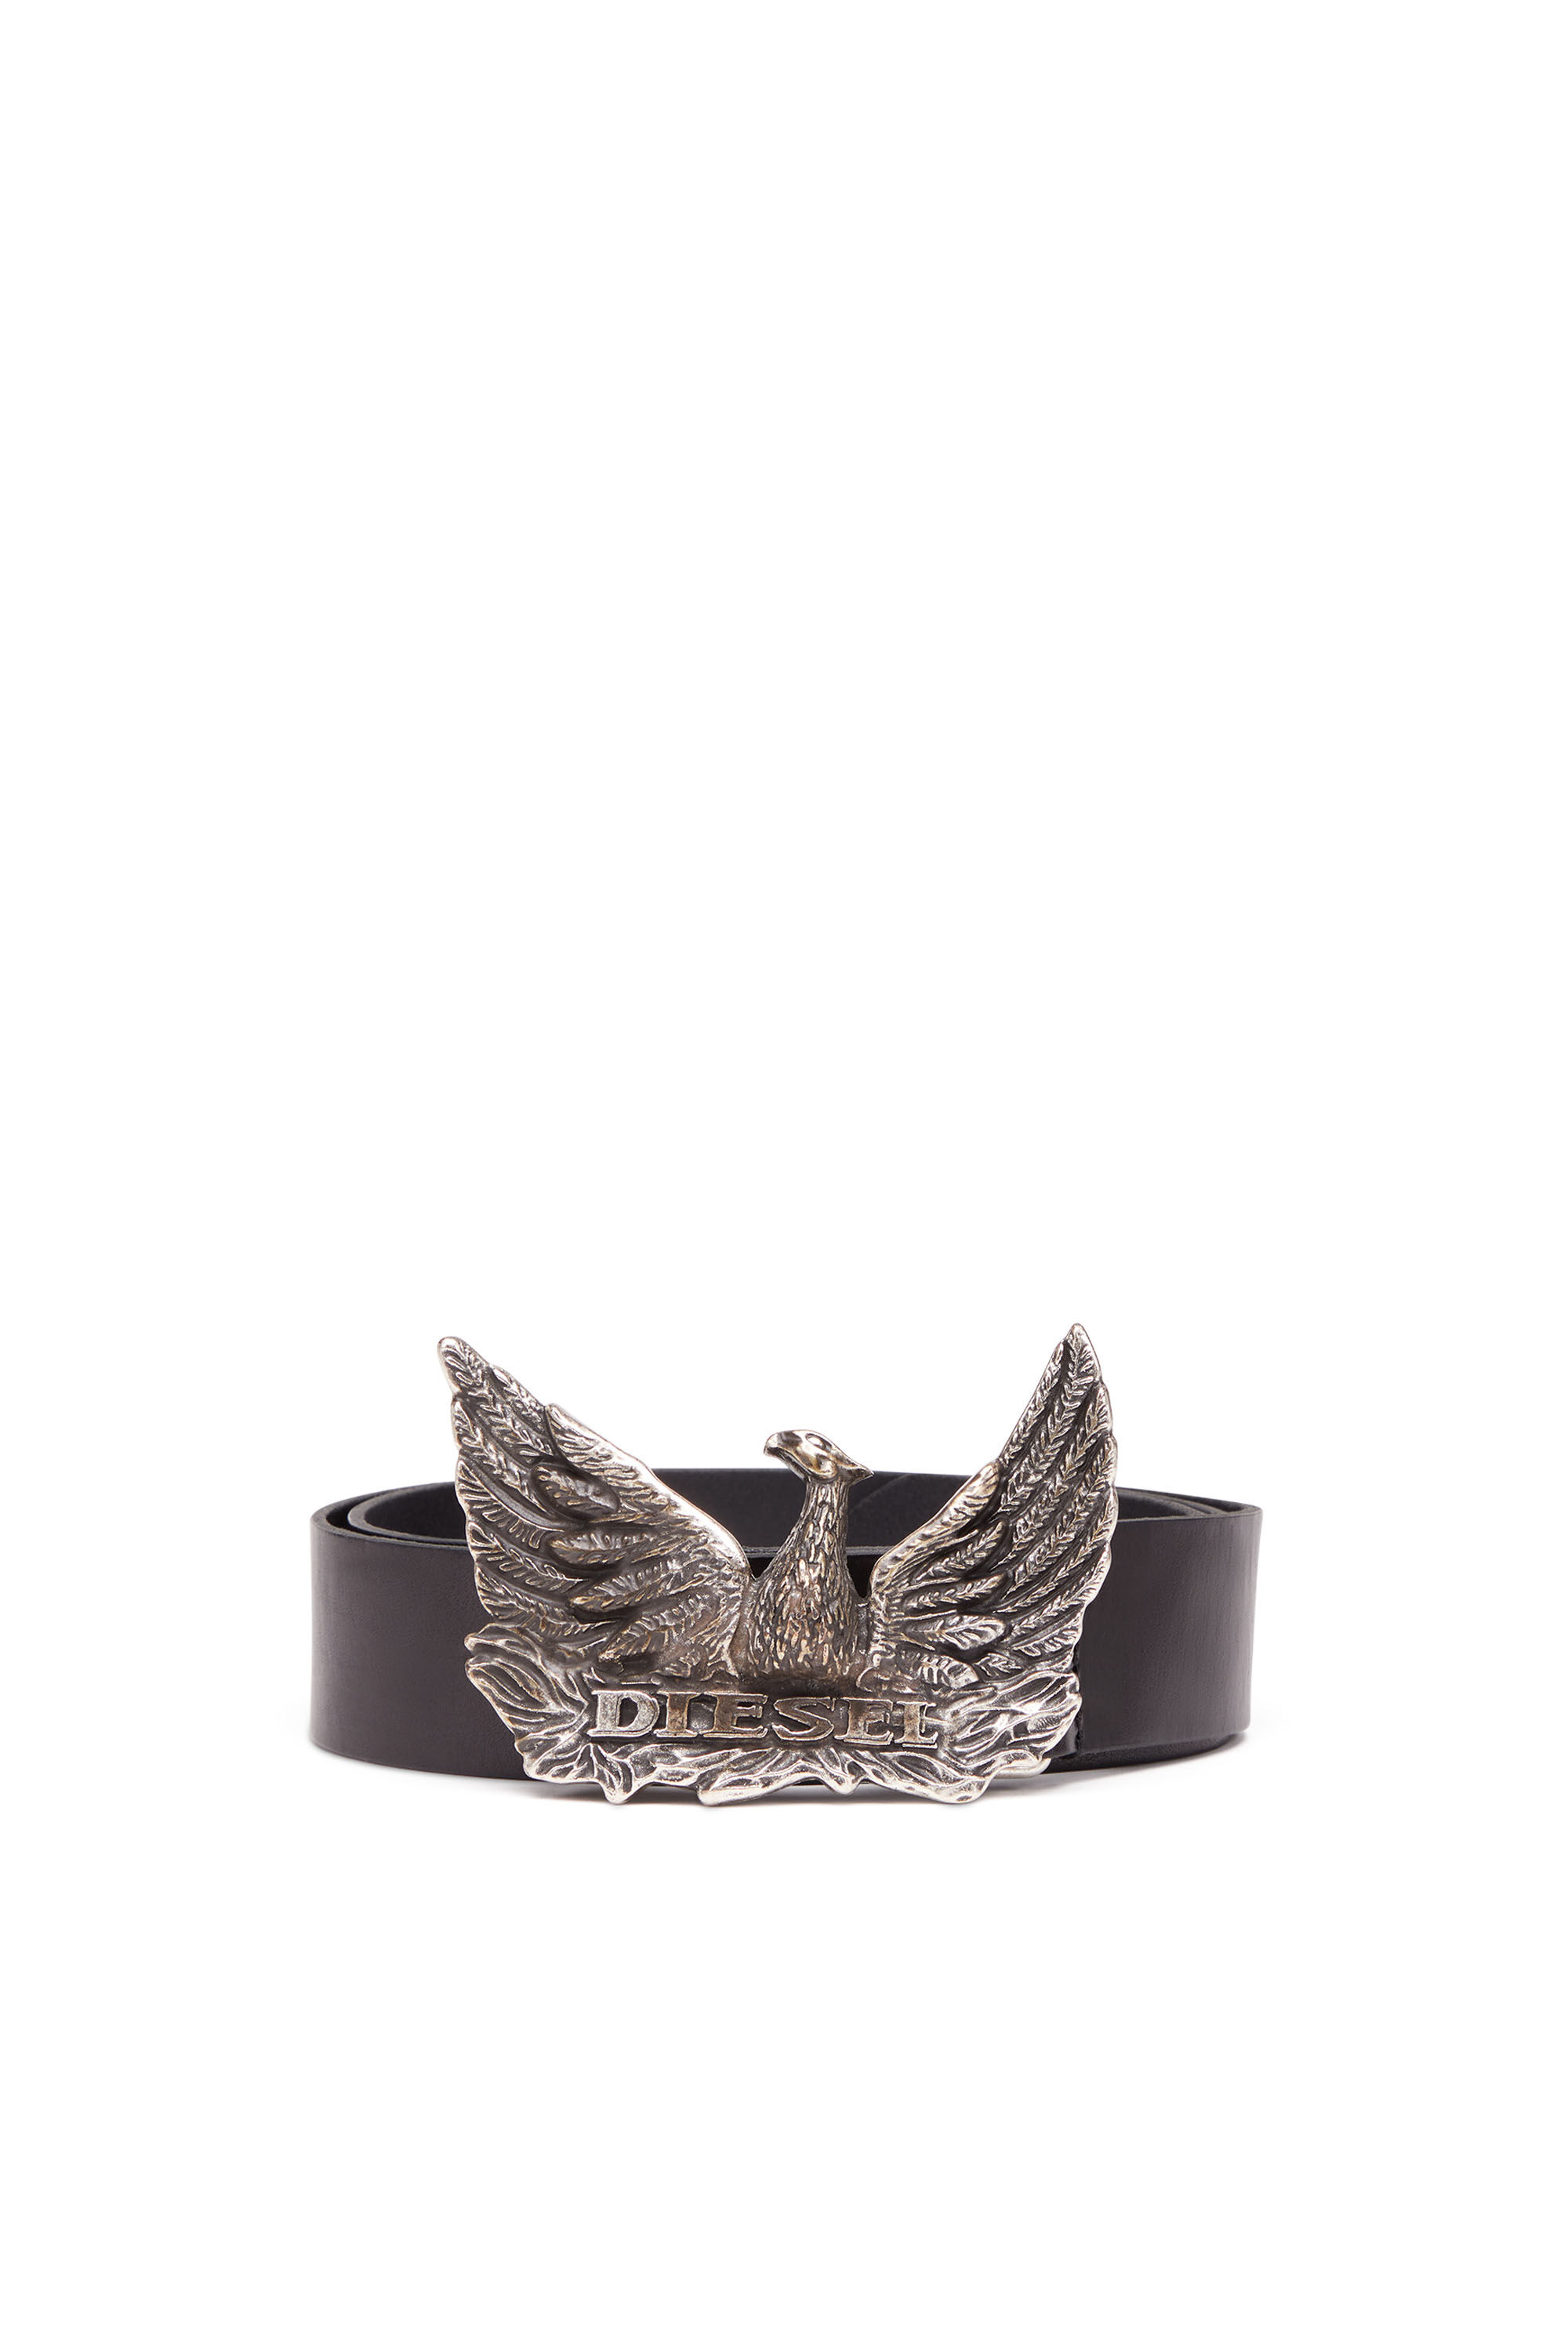 PHOENIX BELT Leather belt with phoenix buckle｜ブラック｜メンズ ...